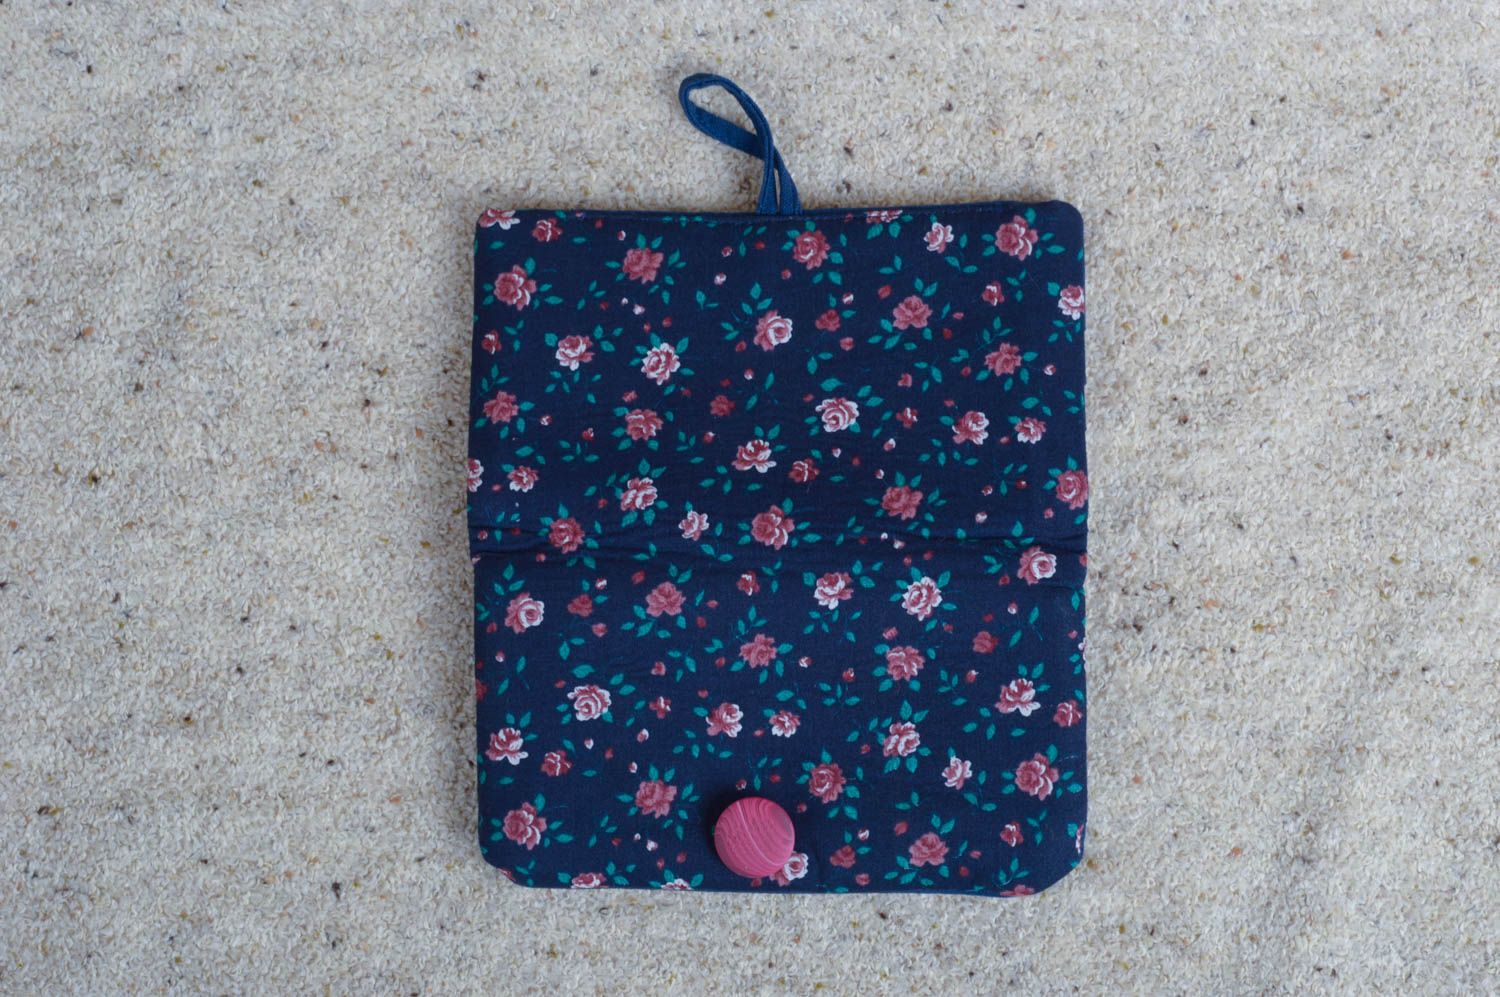 Cute handmade purse designs womens fabric wallet fashion accessories for girls photo 3